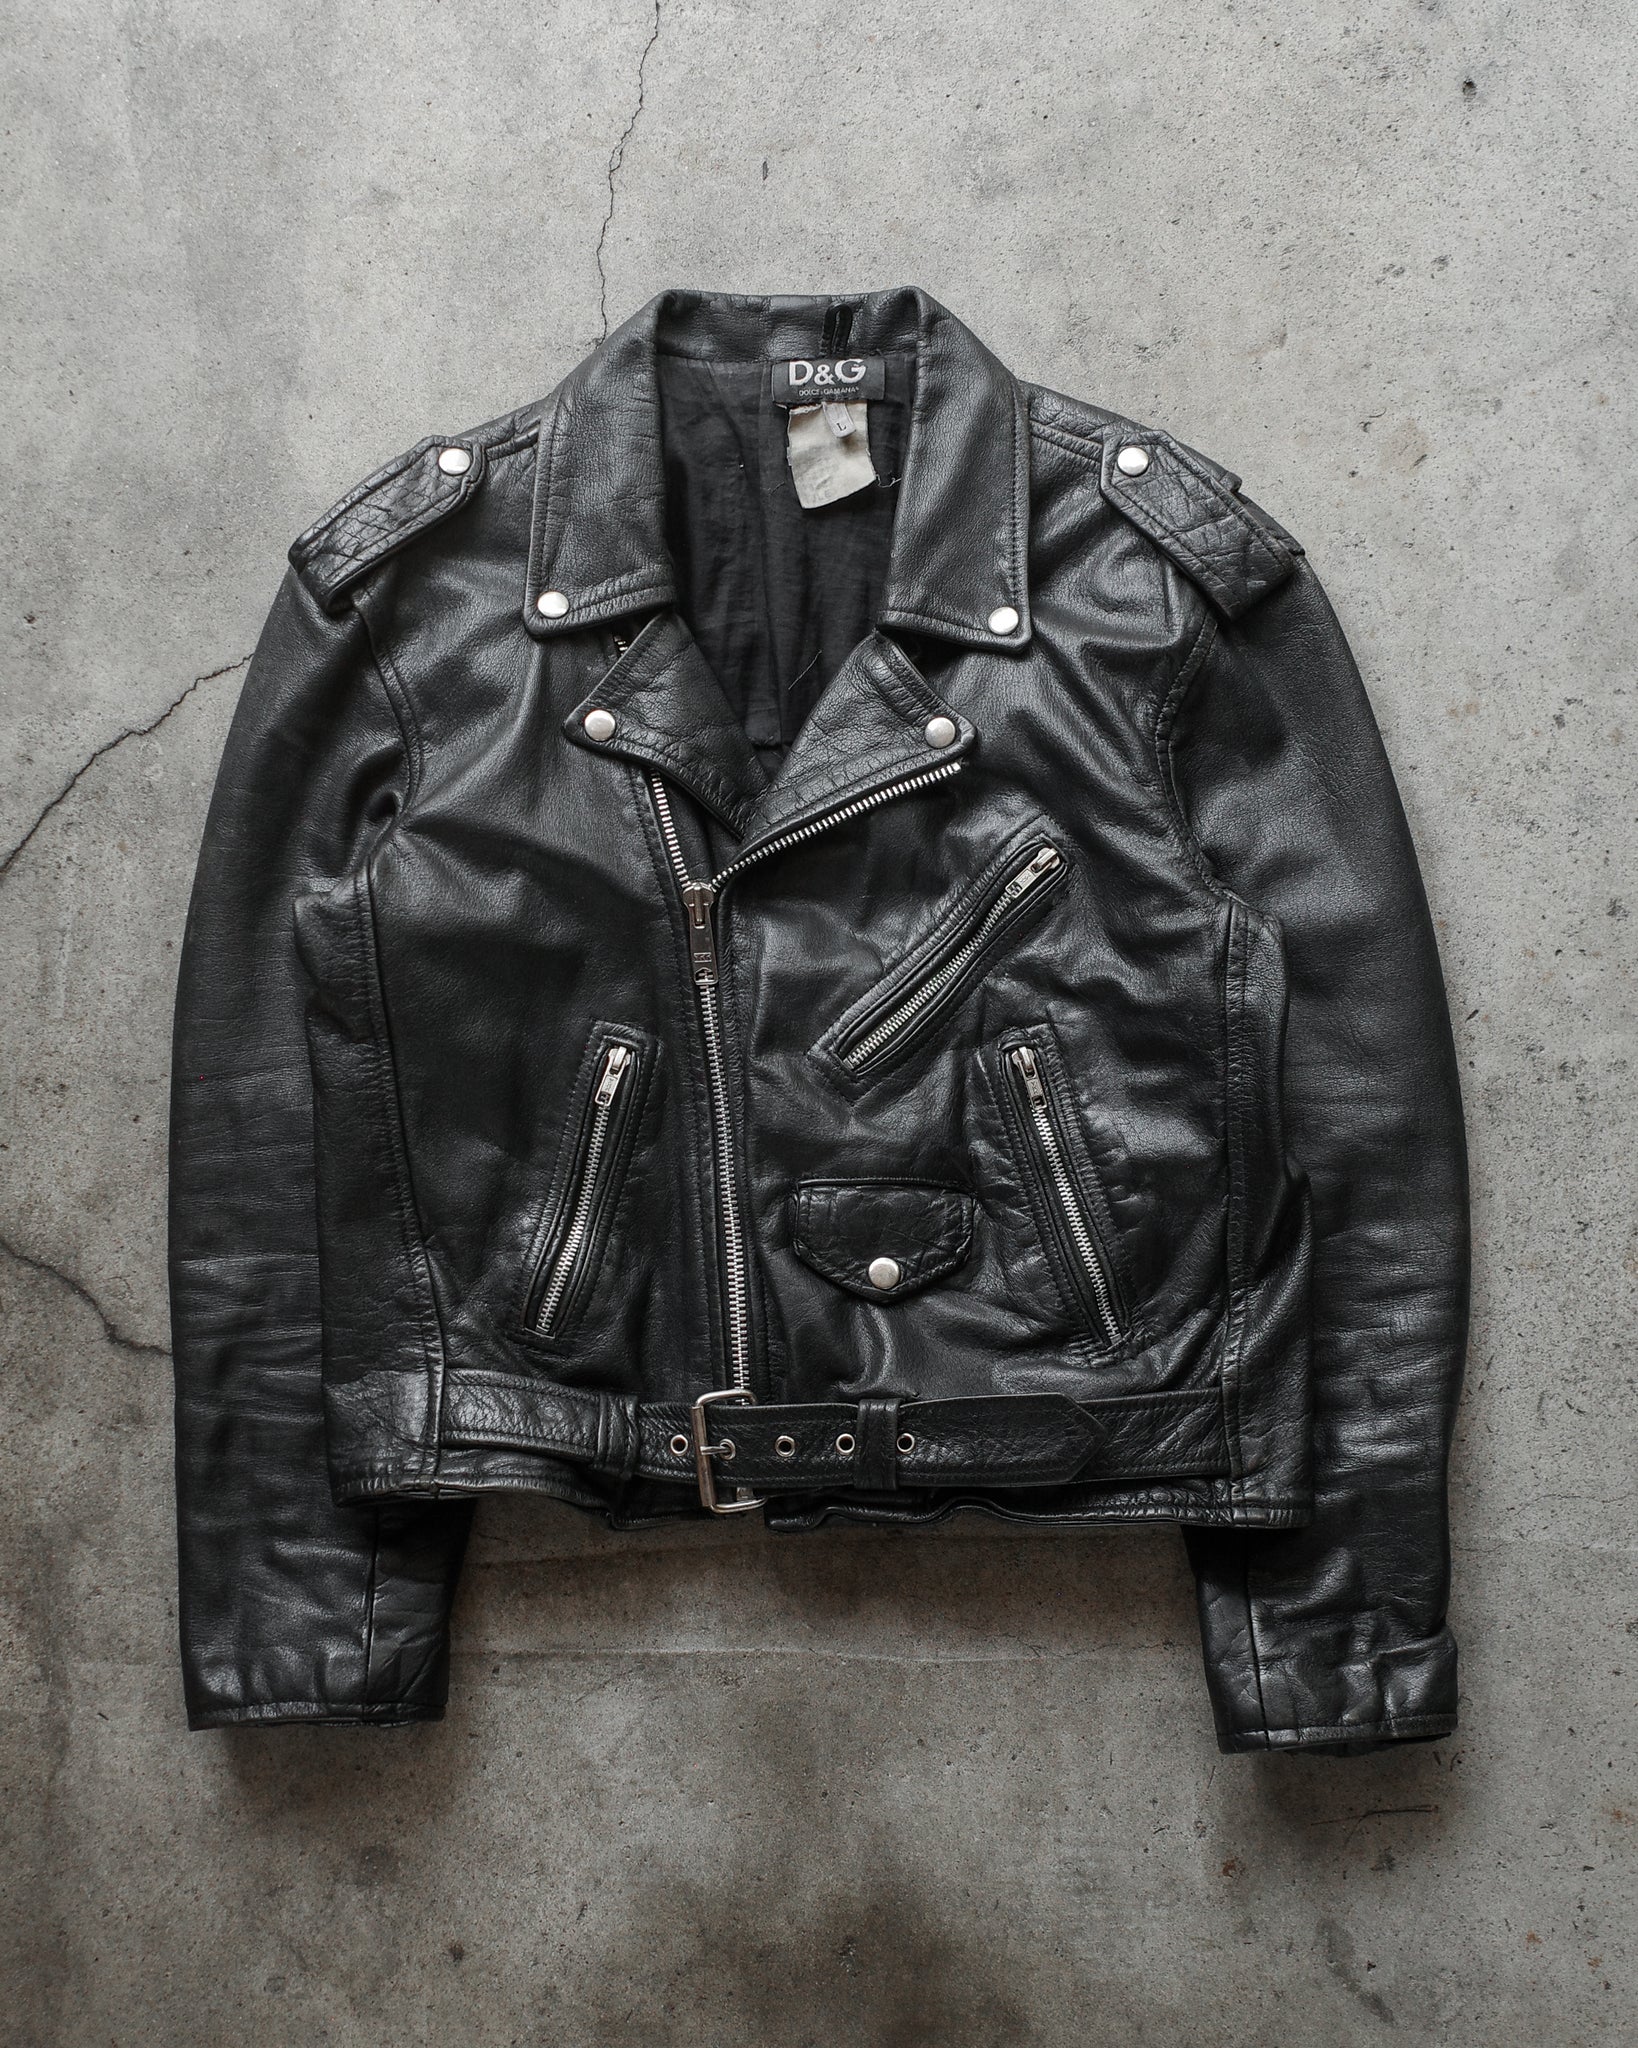 Dolce & Gabbana Cropped Leather Jacket